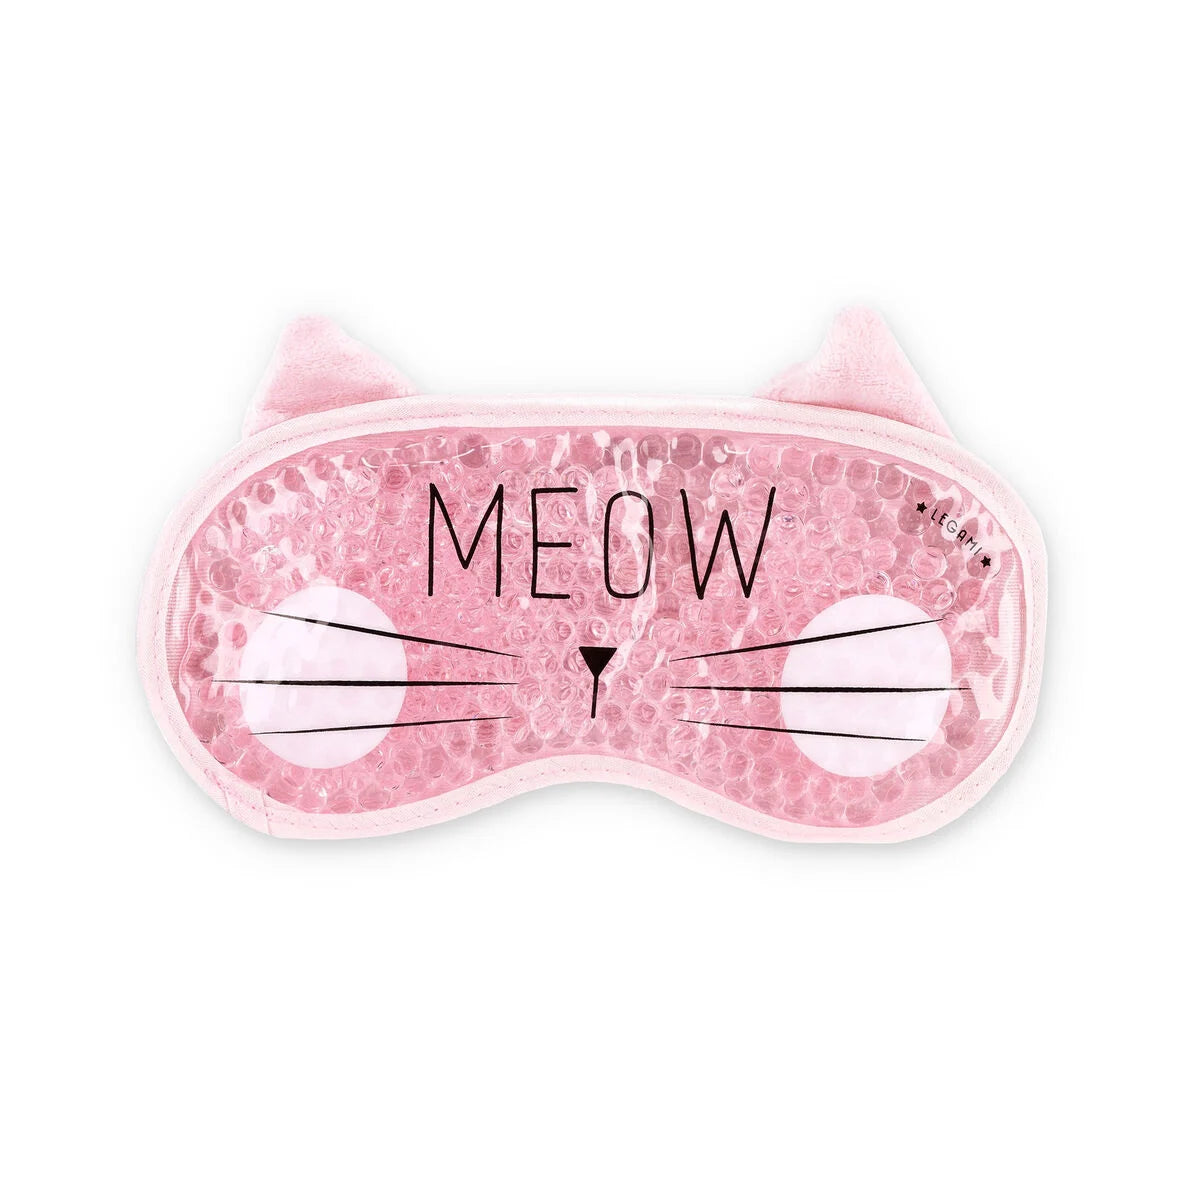 Fabulous Gifts Beauty Legami Gel Eye Mask - Kitty by Weirs of Baggot Street